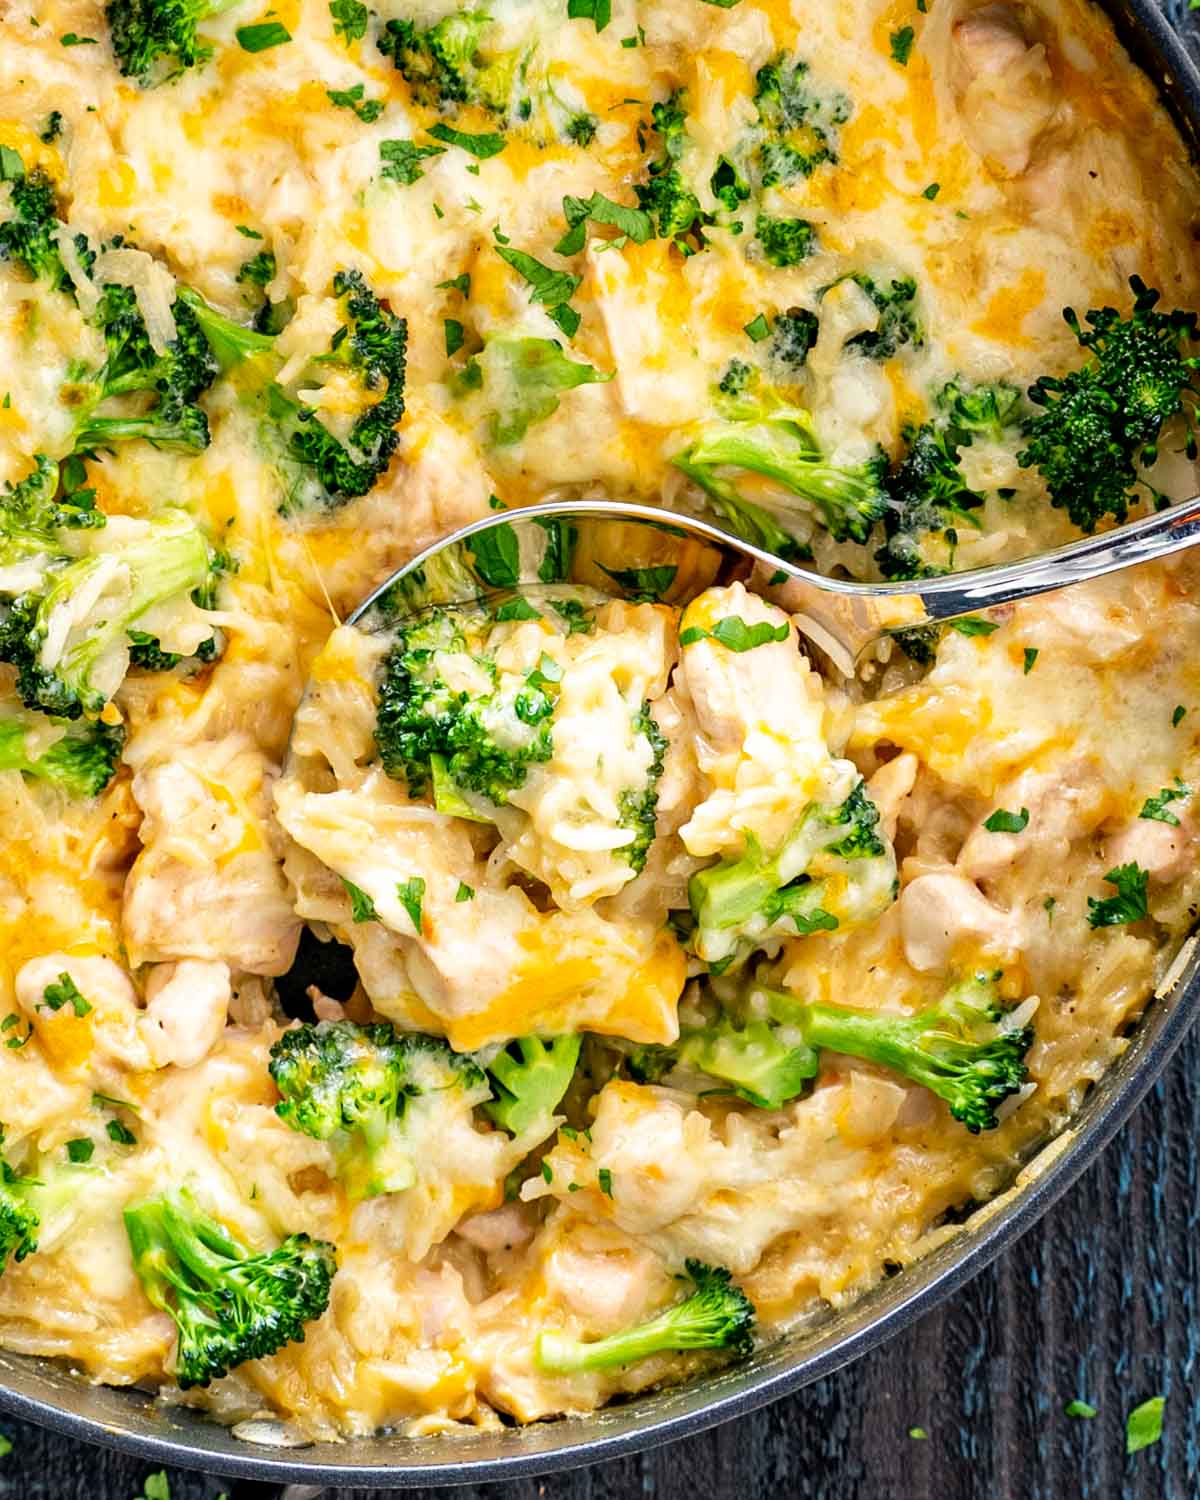 https://www.jocooks.com/wp-content/uploads/2018/12/chicken-broccoli-rice-casserole-1-10.jpg